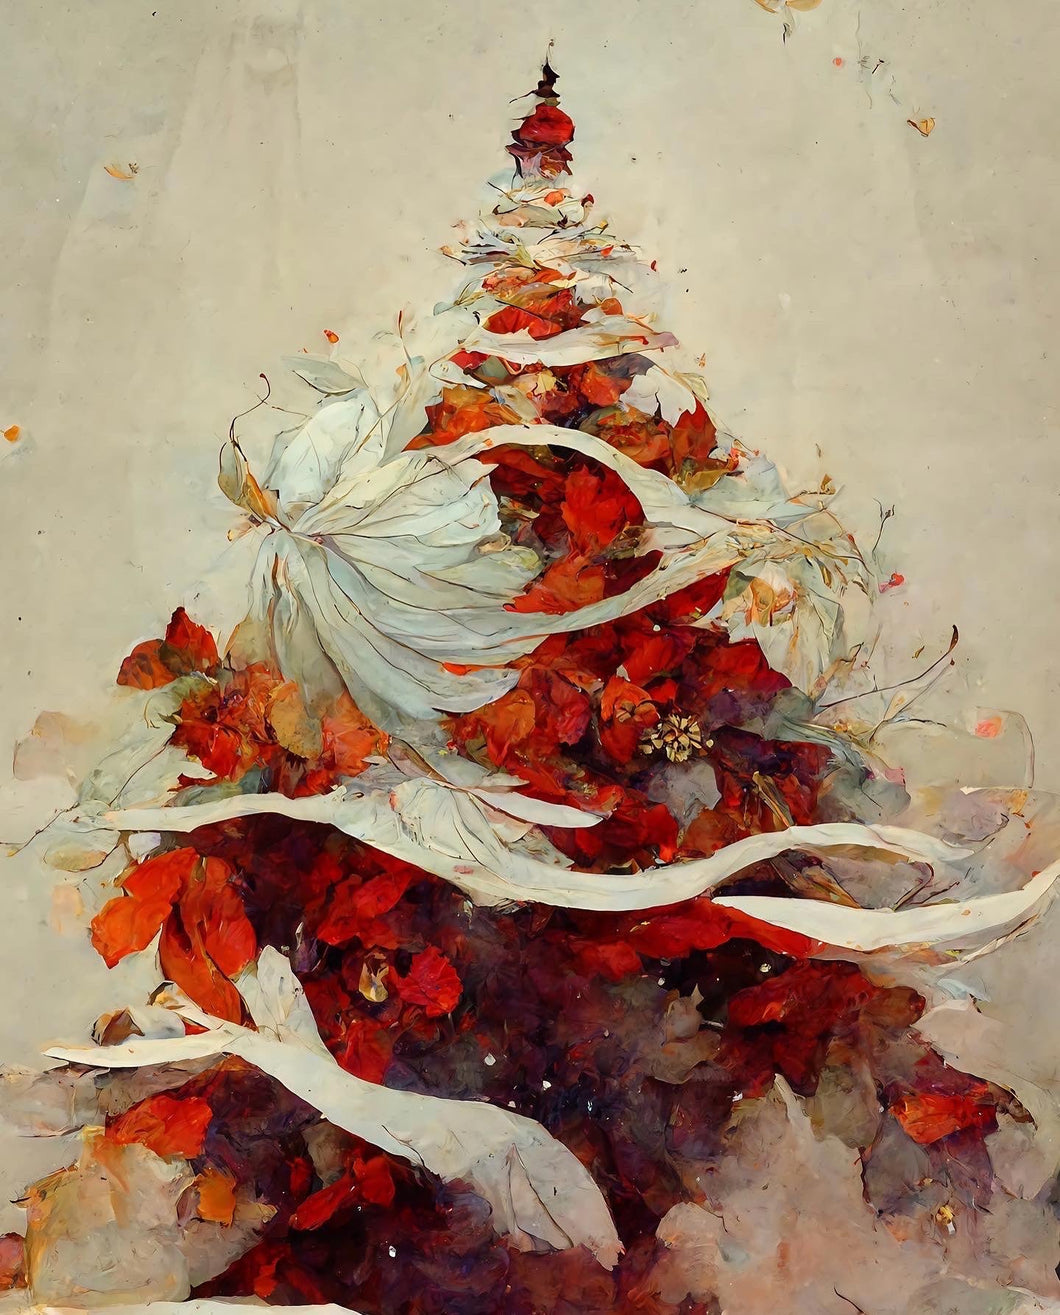 *PREORDER* Poinsettia Christmas Tree (variant 2) by CJ